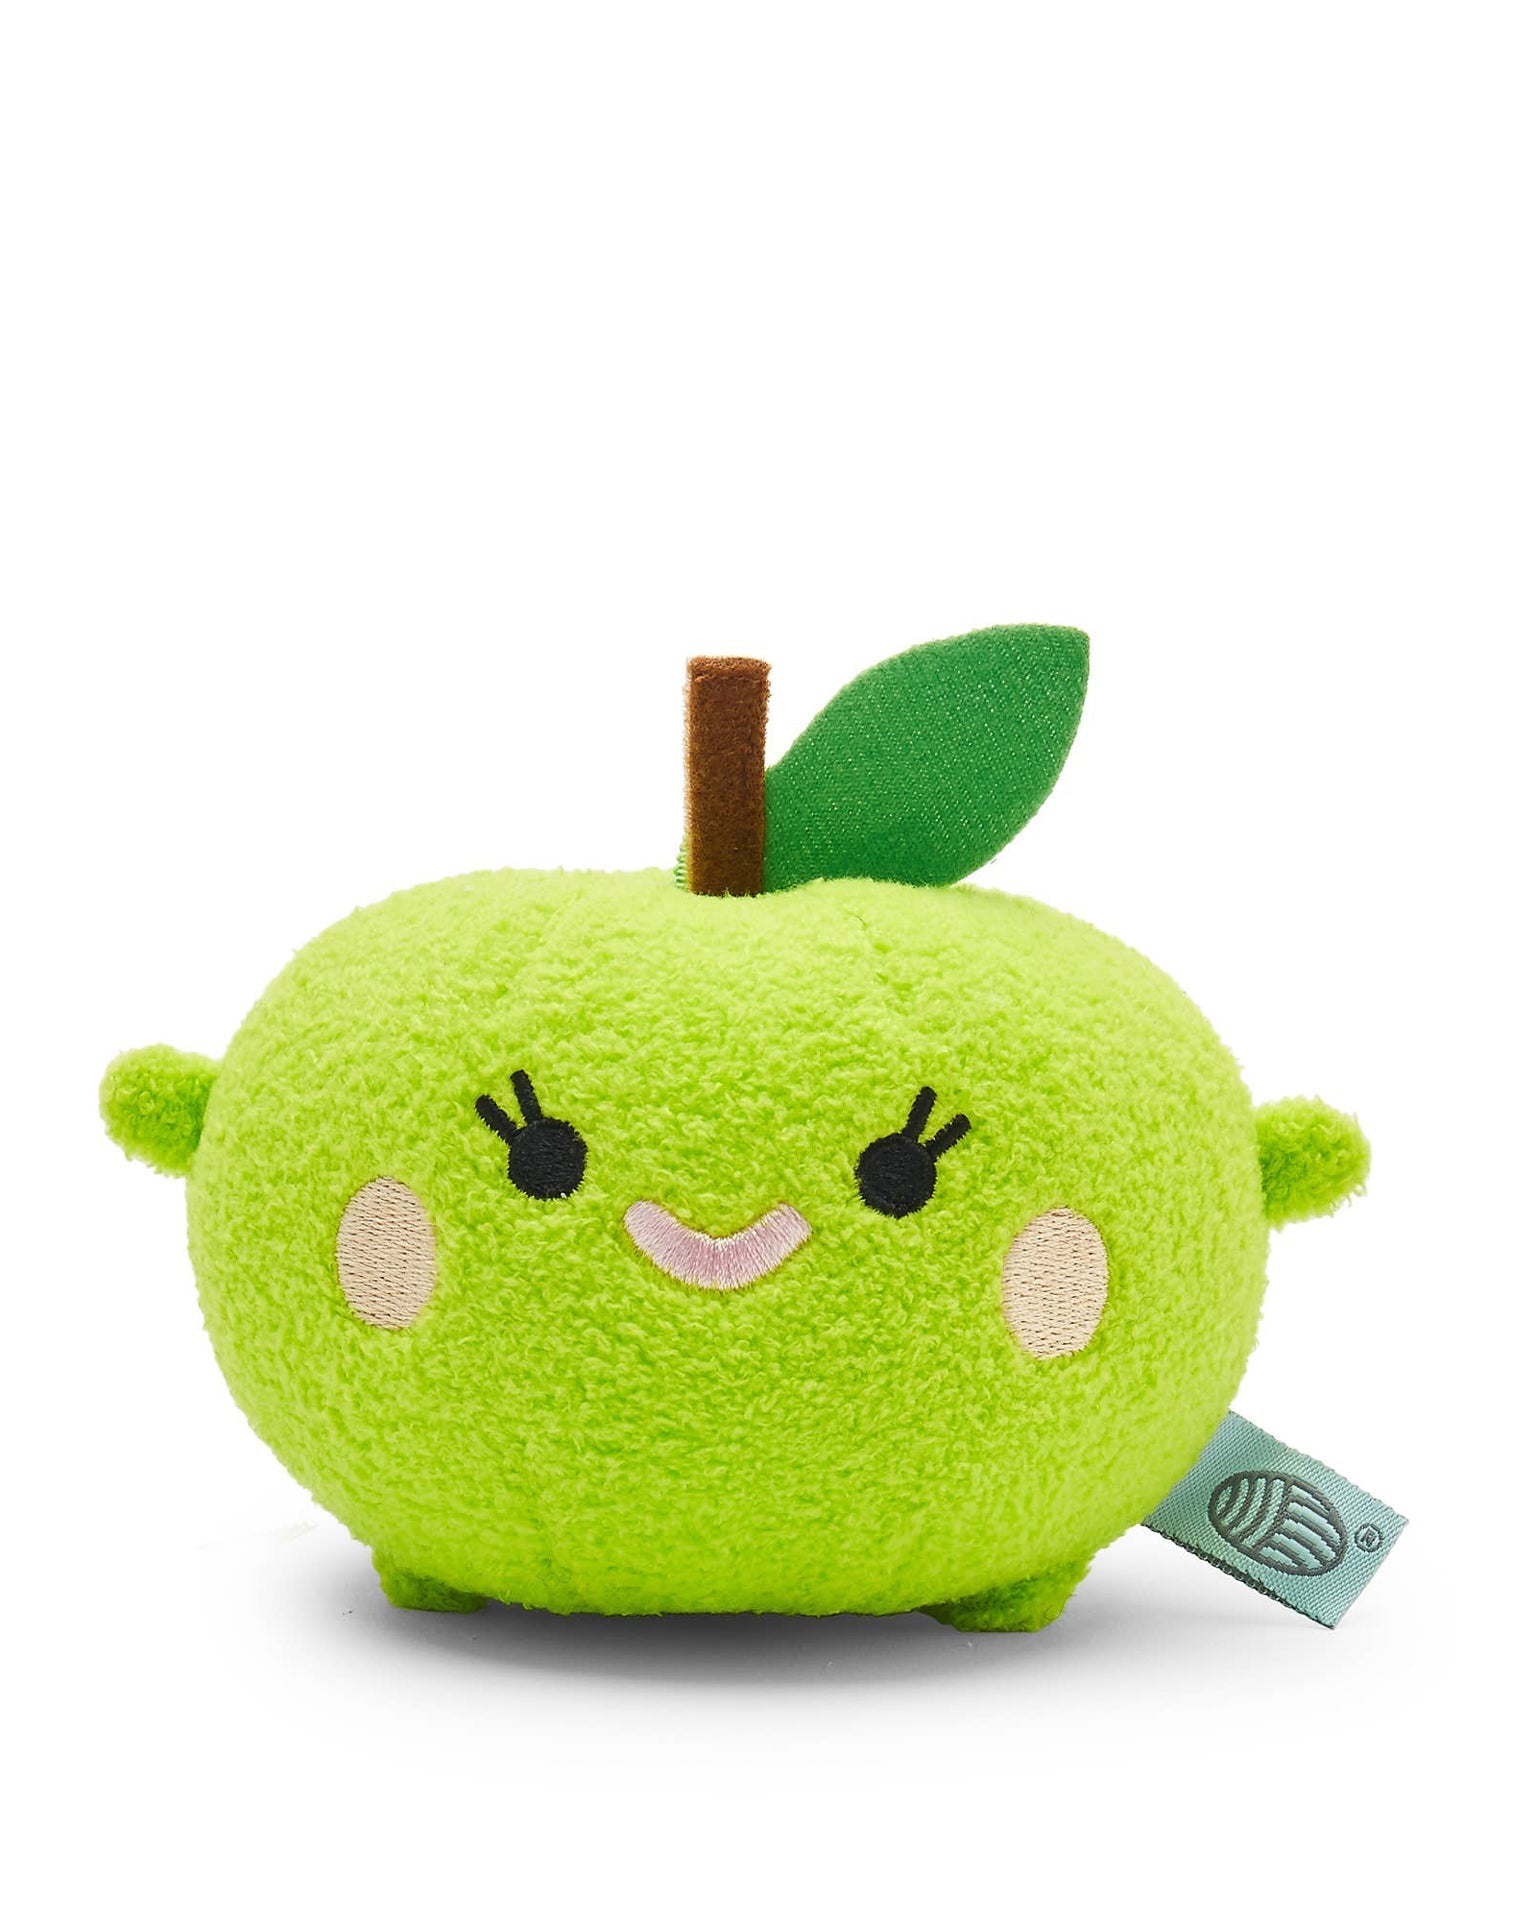 Little noodoll play riceapple mini - apple